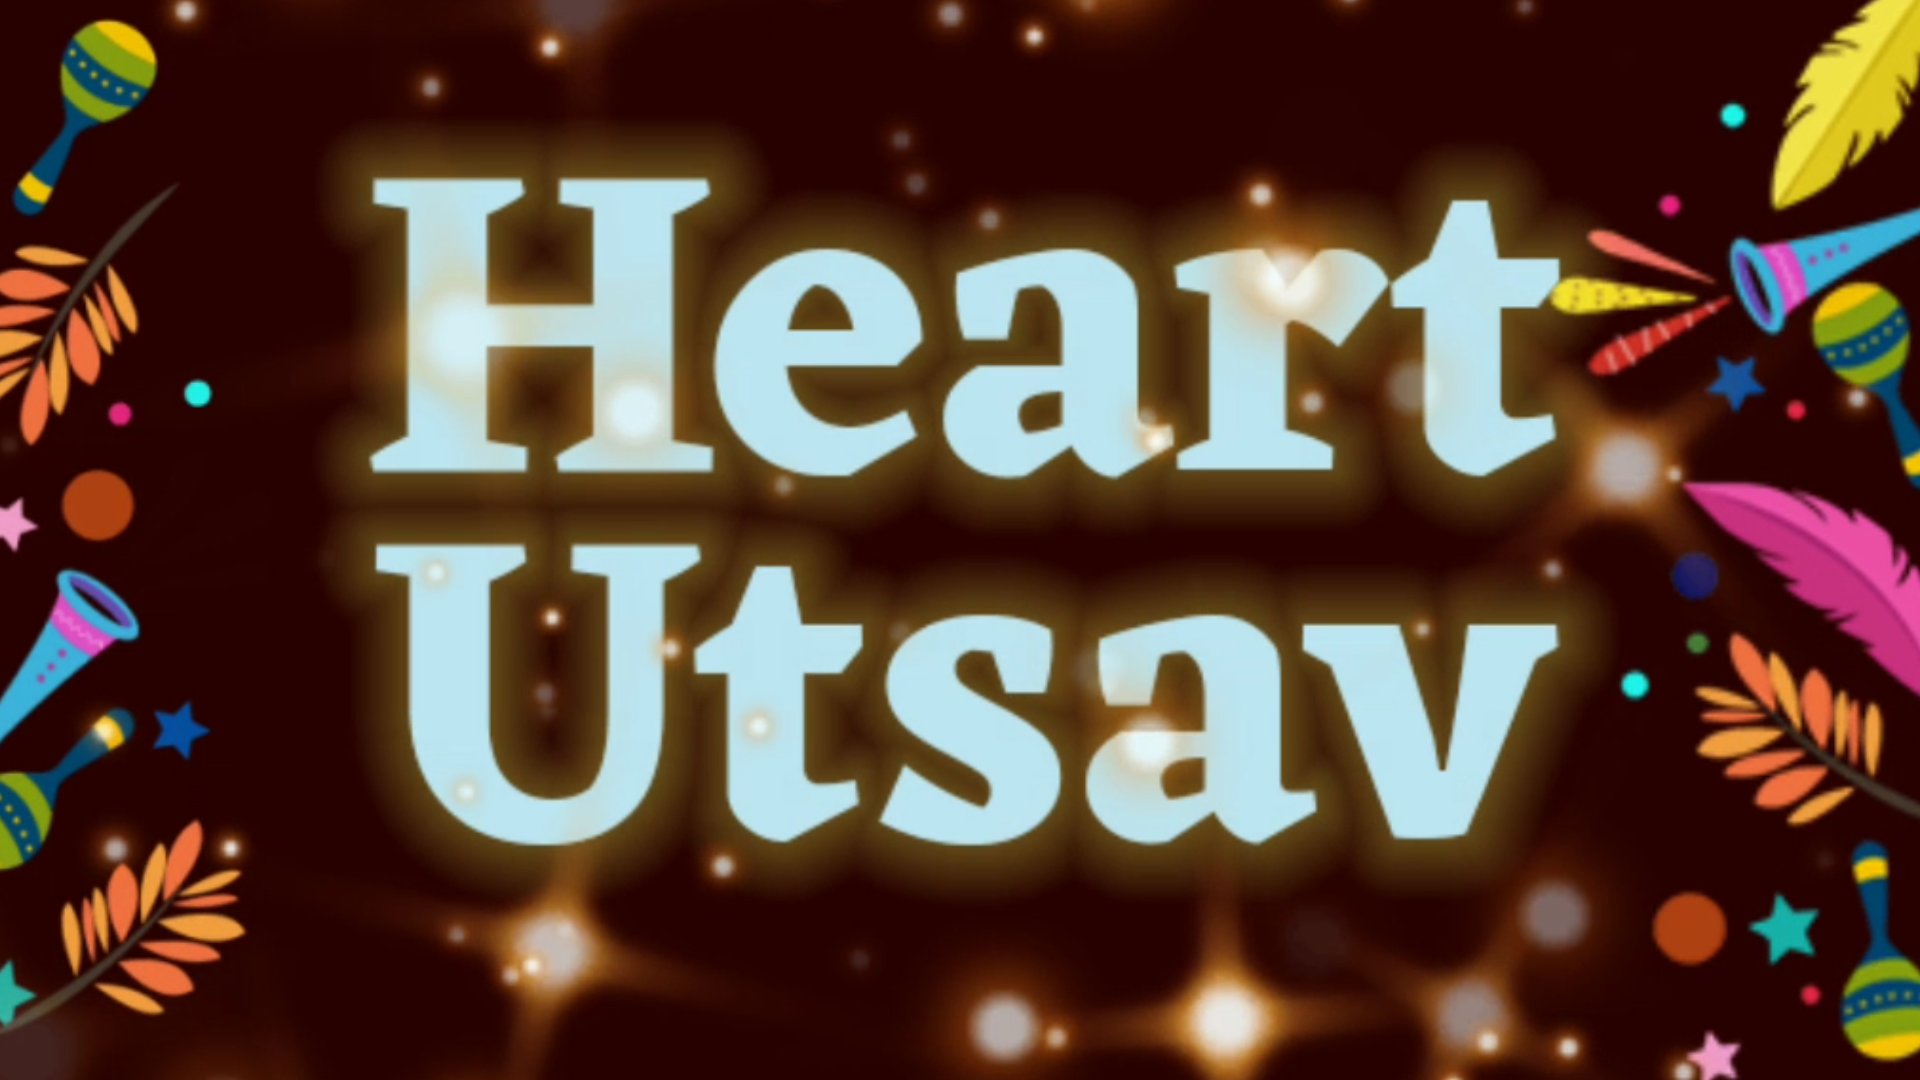 Indian Cardiologist announces Heart Utsav to celebrate heart health wellness on World heart Day 2020